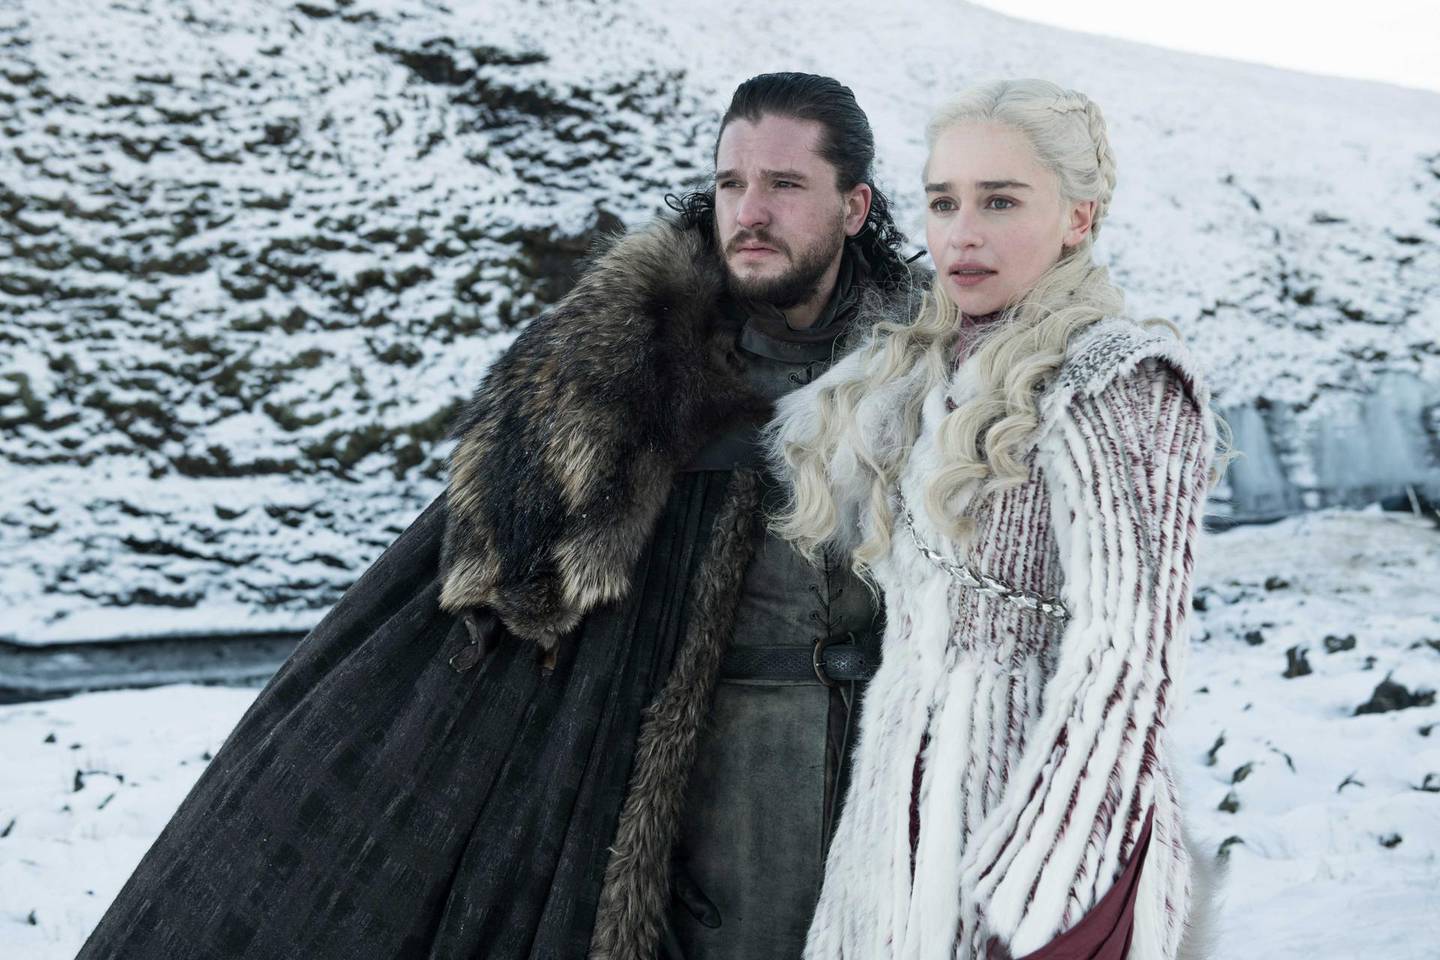 Kit Harington as Jon Snow and Emilia Clarke as Daenerys Targaryen in the season 8 of The Game of Thrones. HBO / OSN